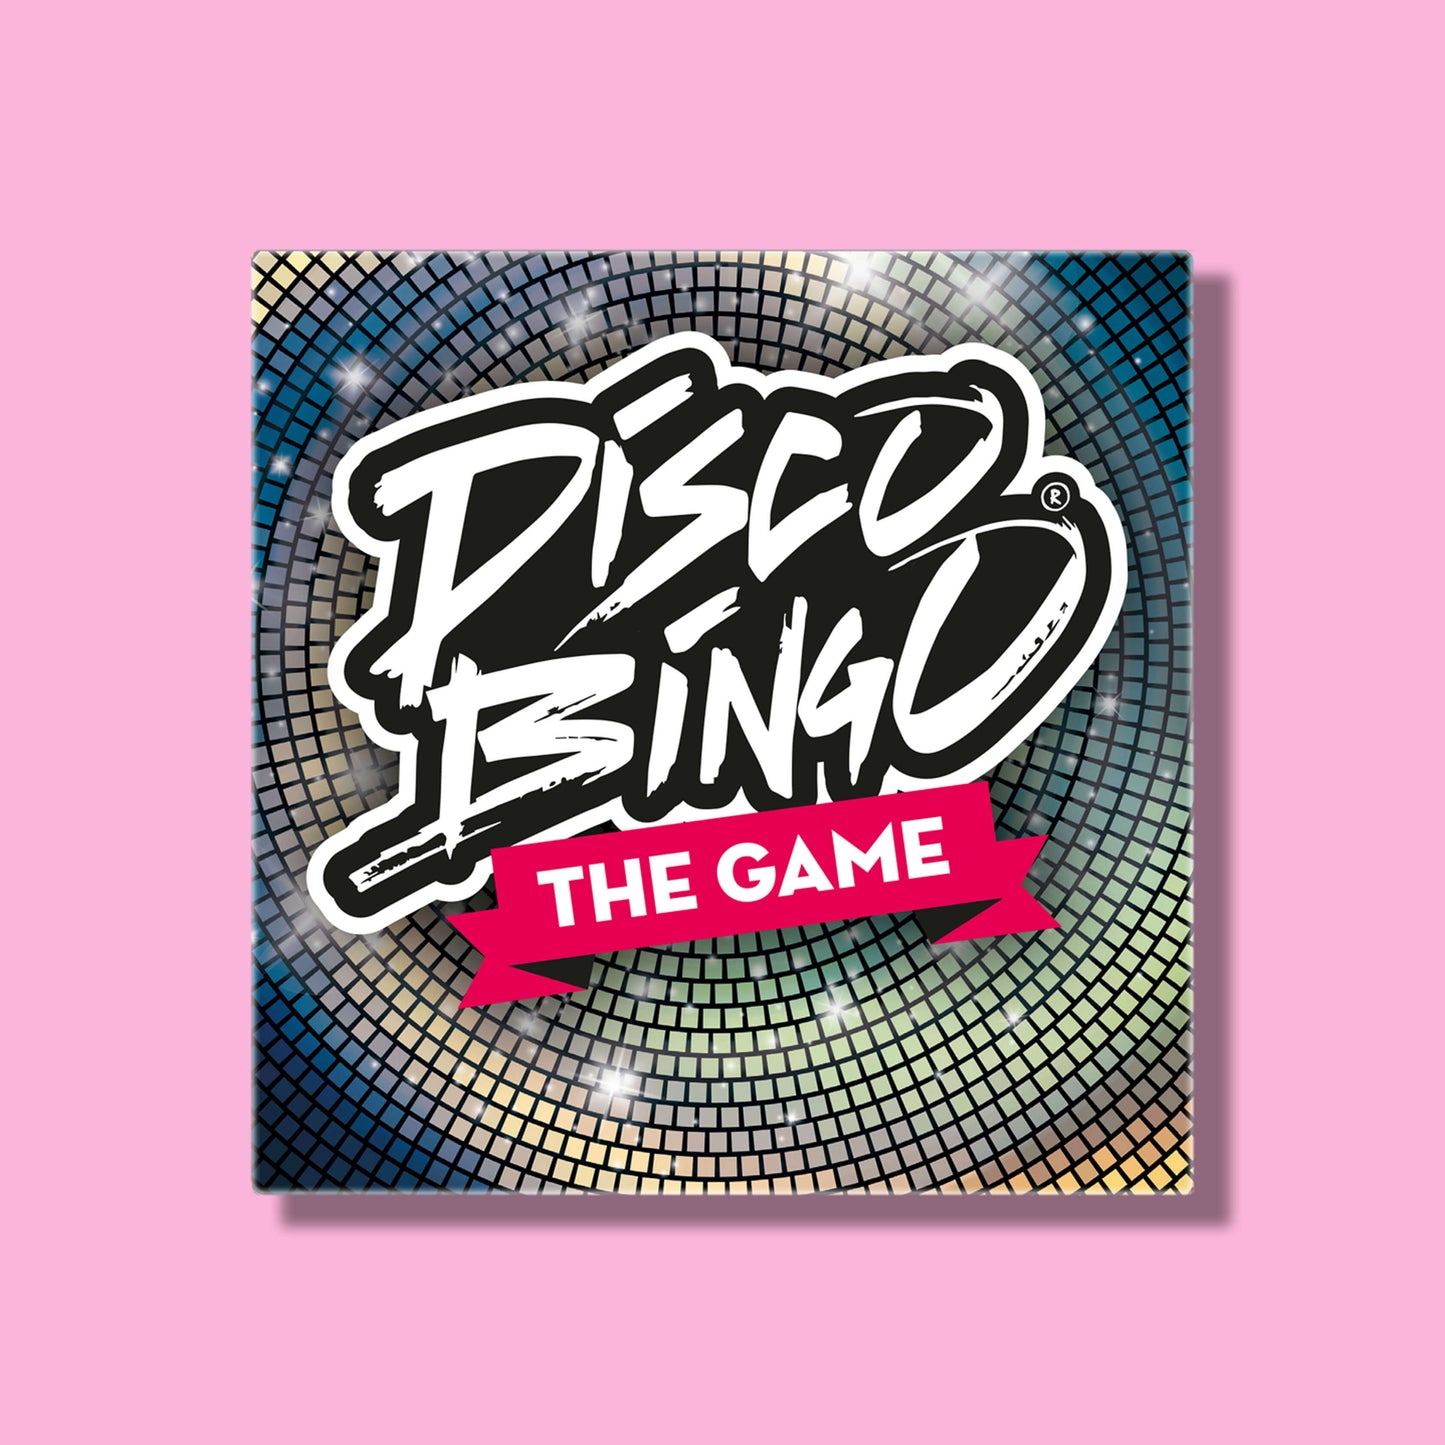 Disco Bingo The Original Game Box